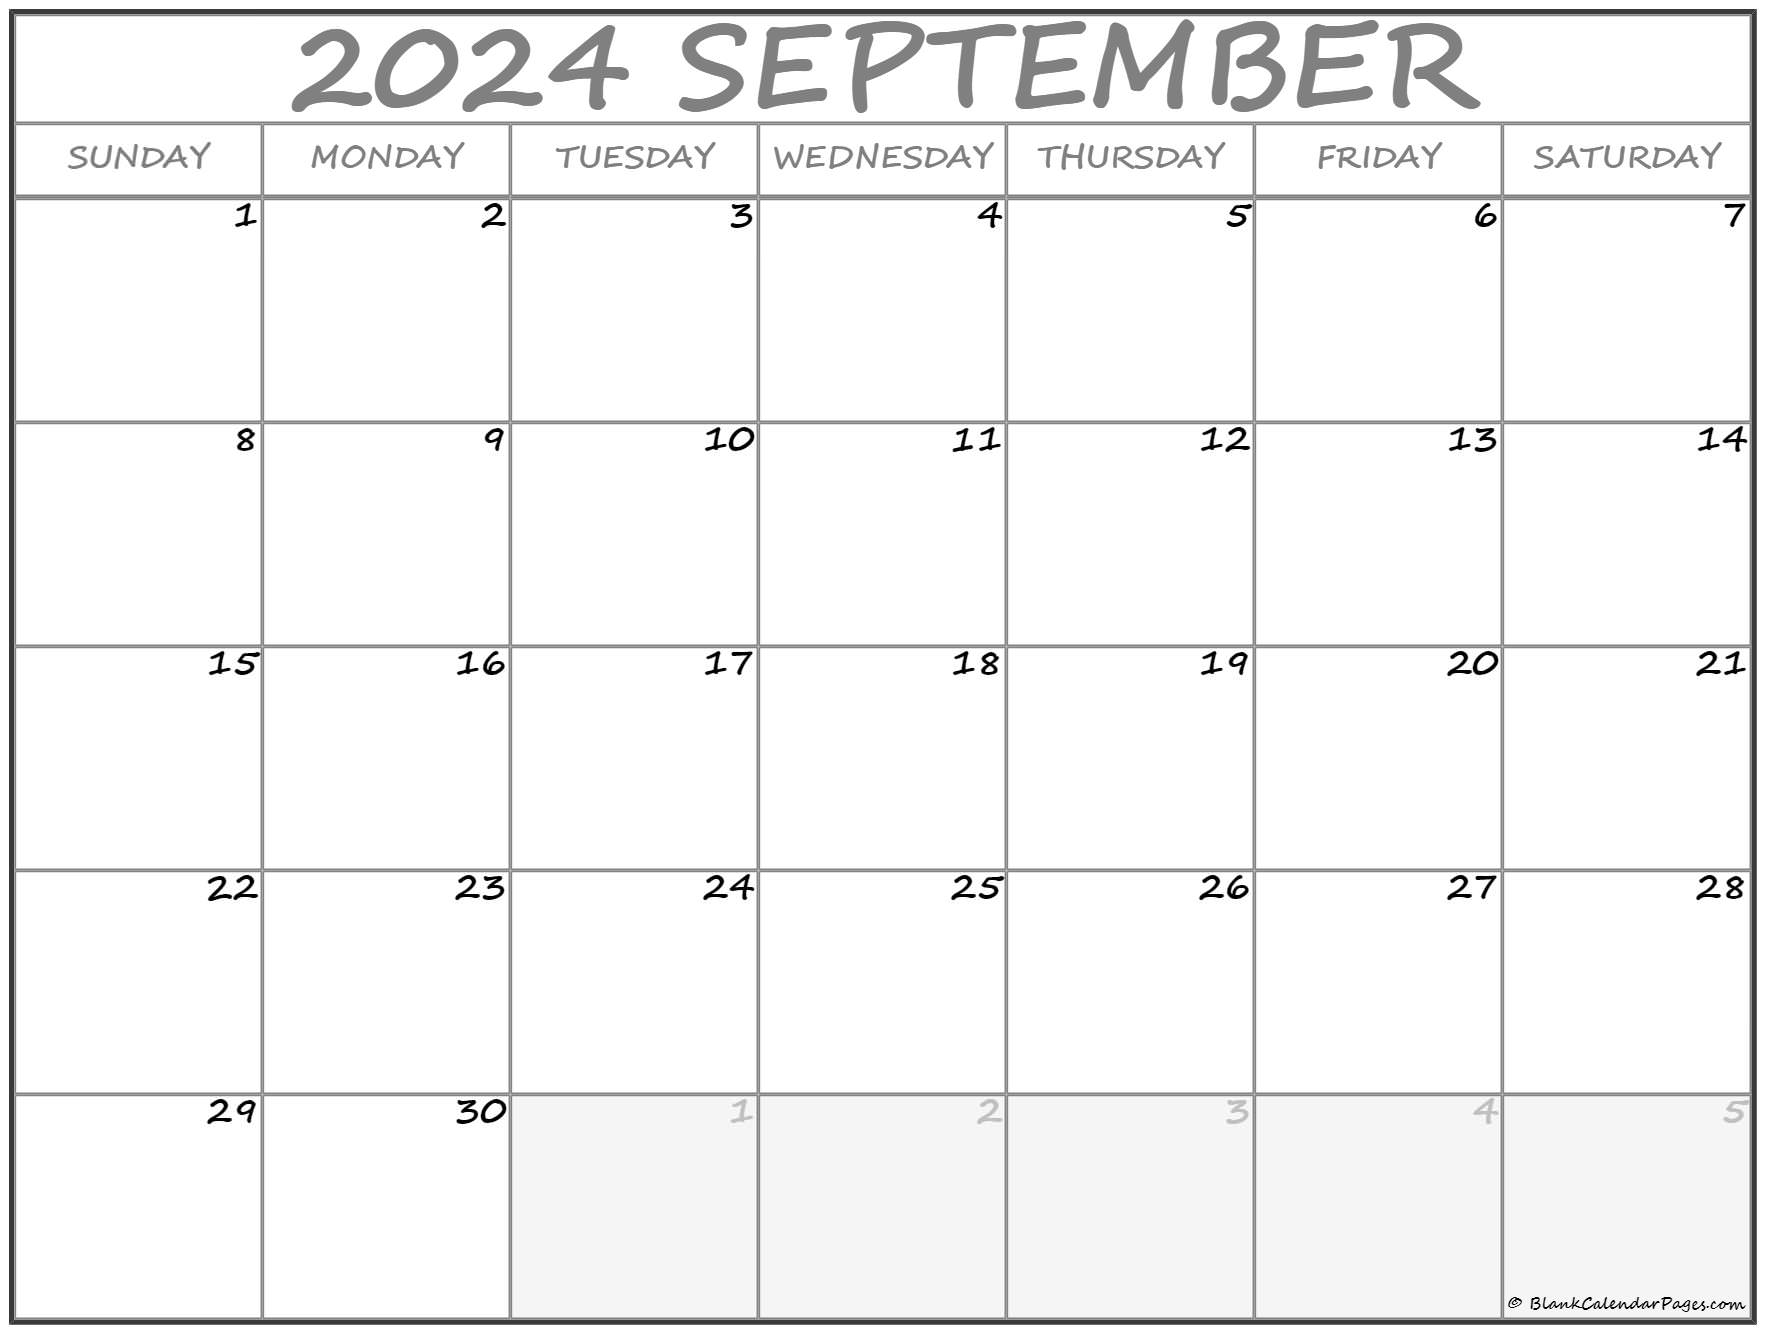 September 2020 calendar | free printable monthly calendars